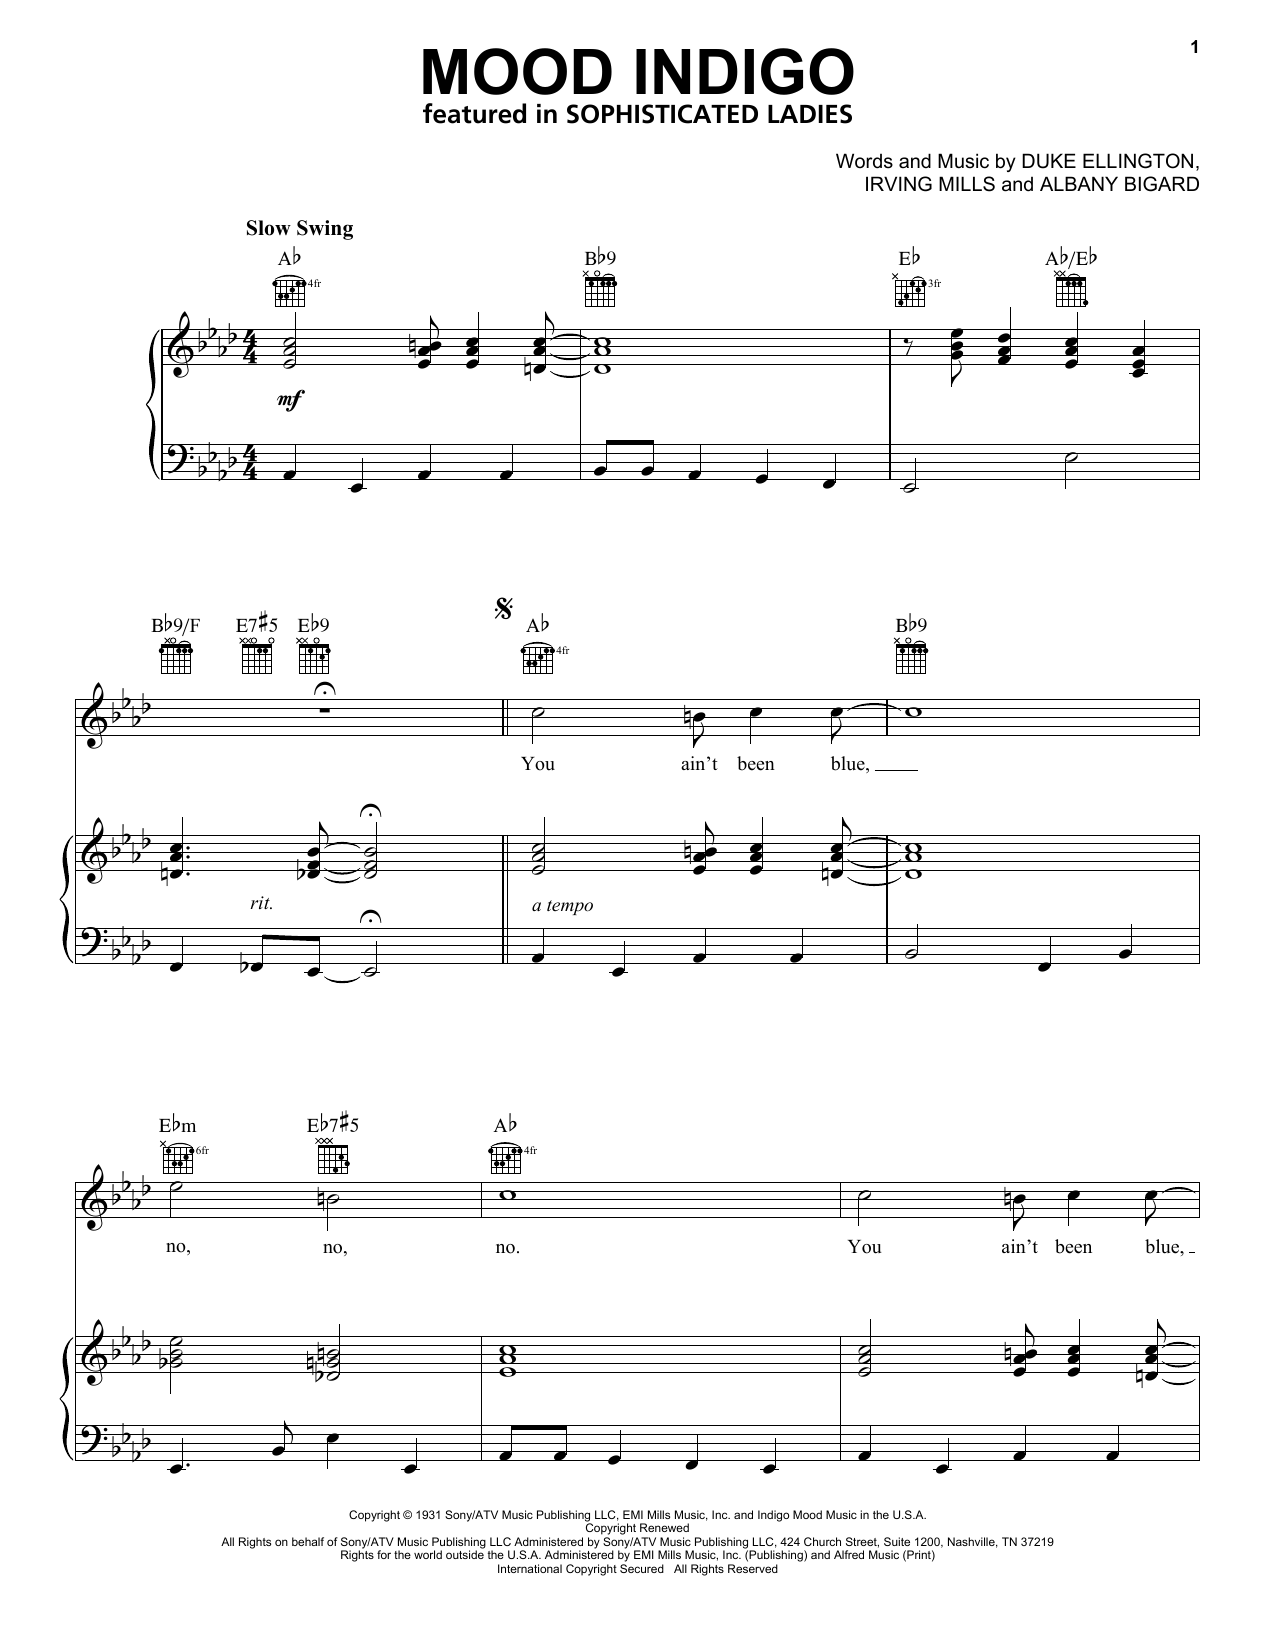 Duke Ellington Mood Indigo Sheet Music Notes & Chords for Violin - Download or Print PDF